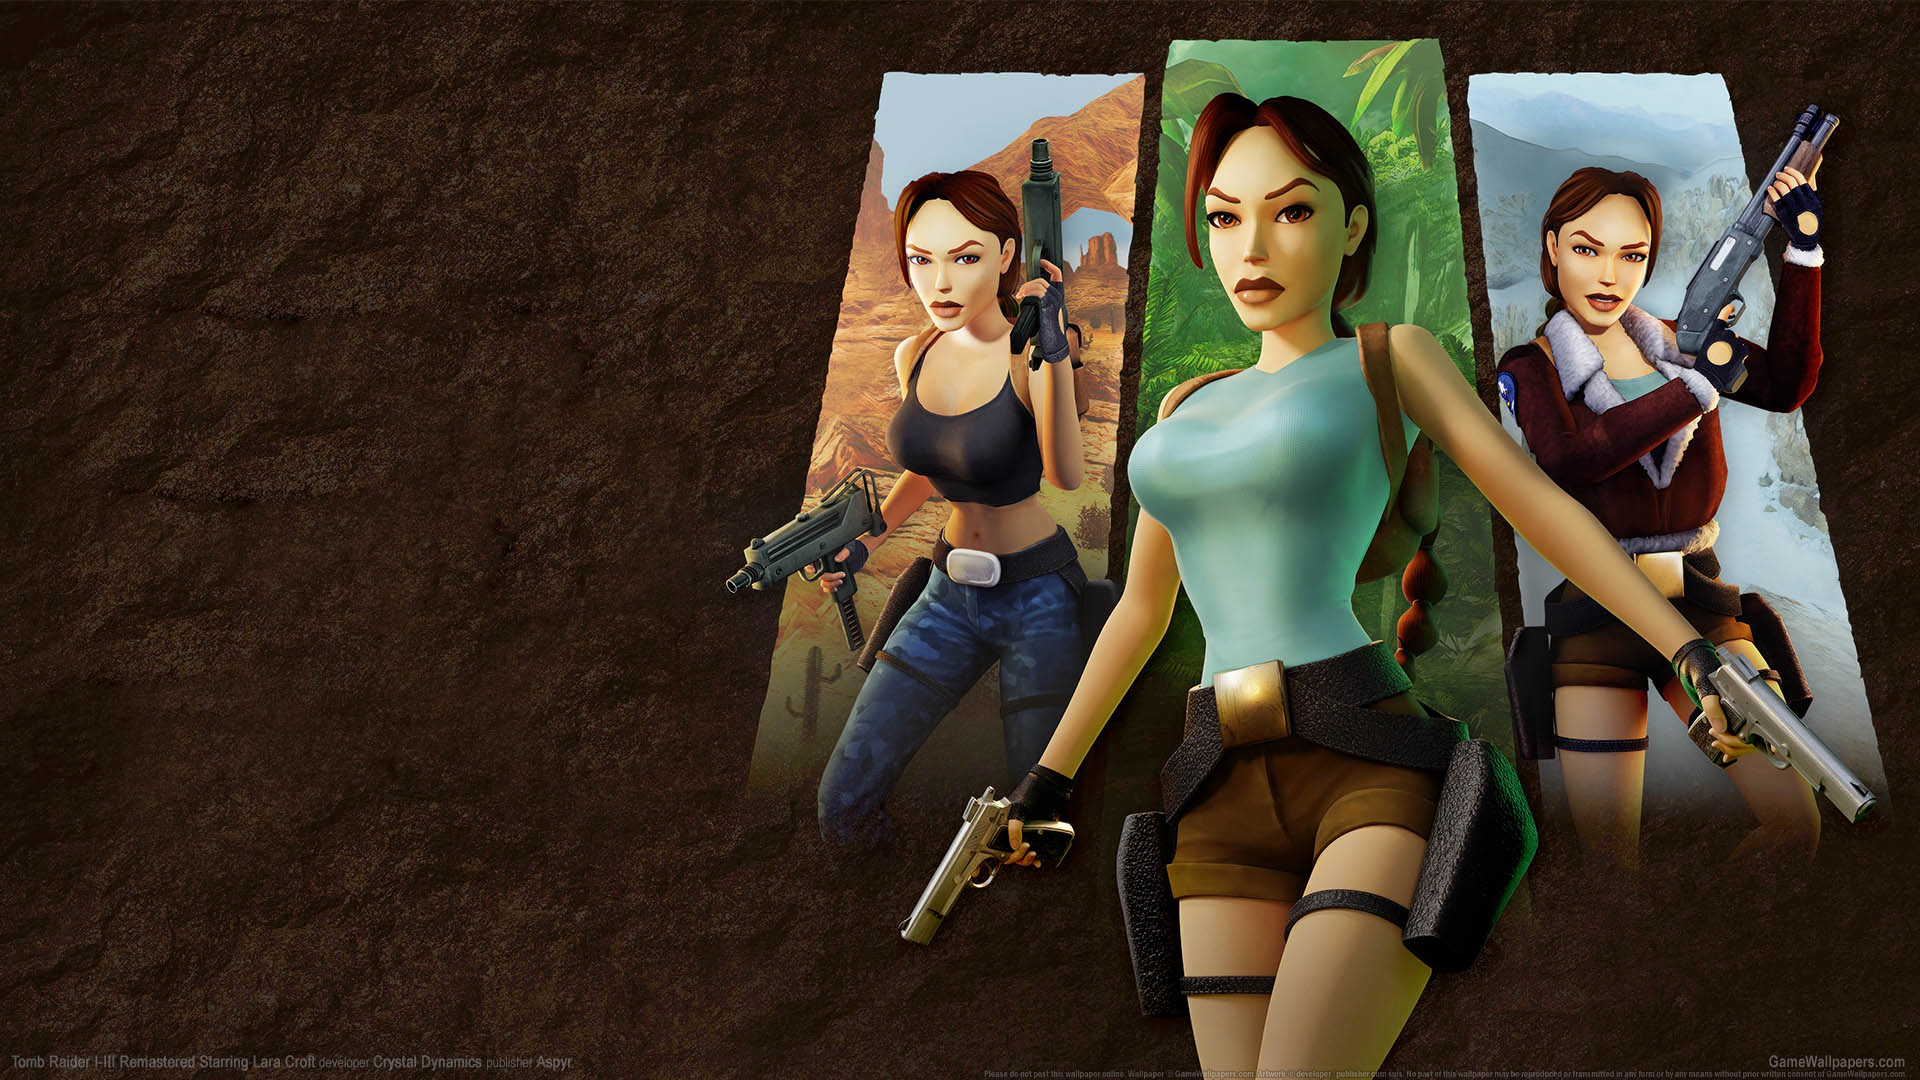 Tomb Raider I-III Remastered Starring Lara Croft wallpaper 01 1920x1080